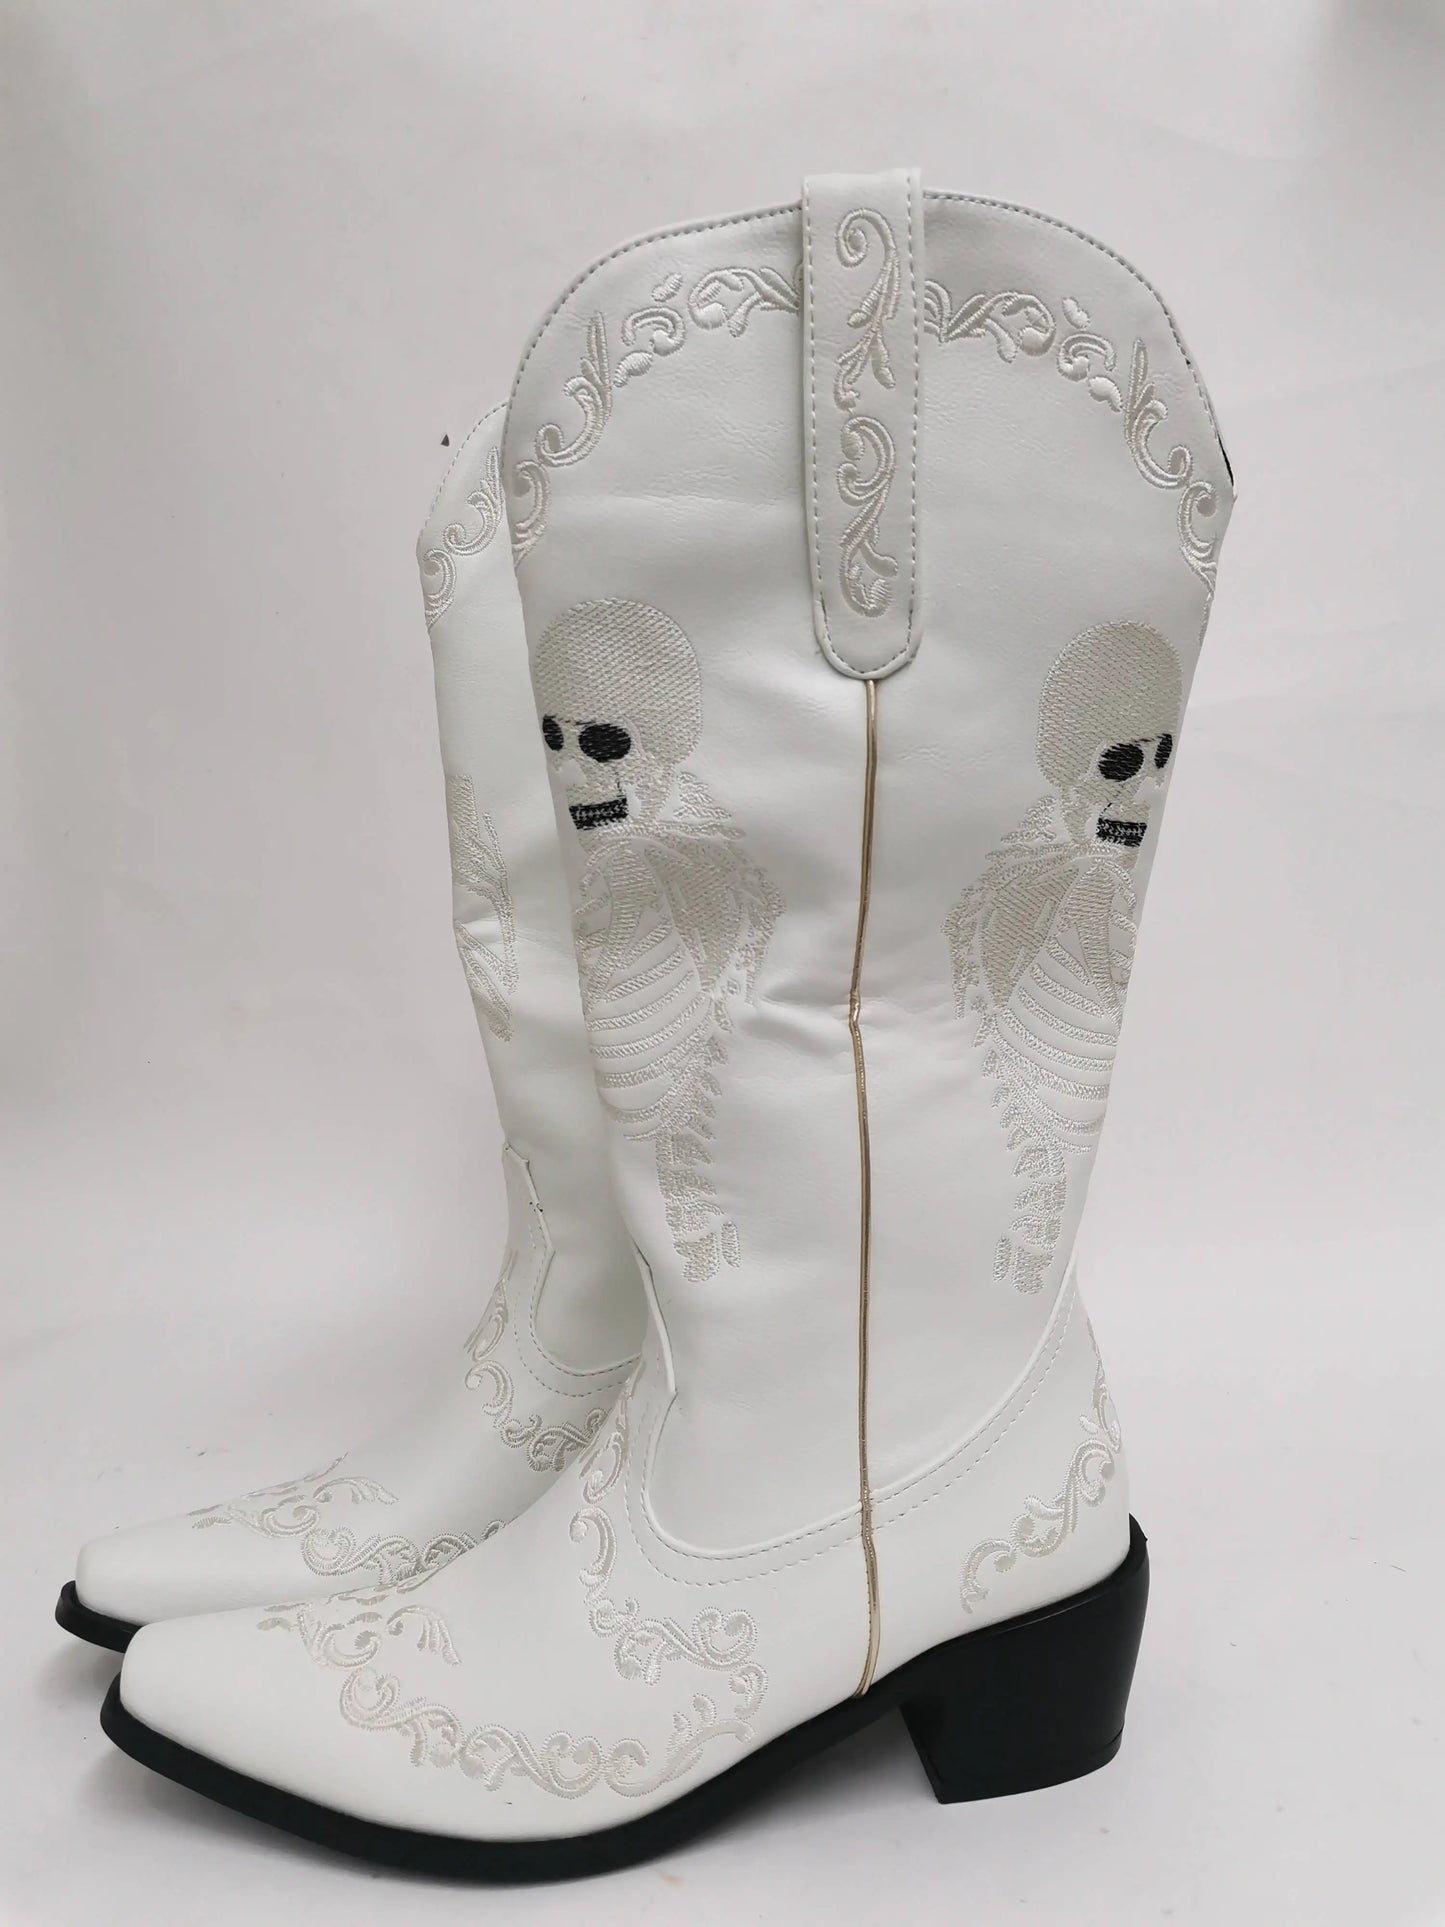 White boot detail